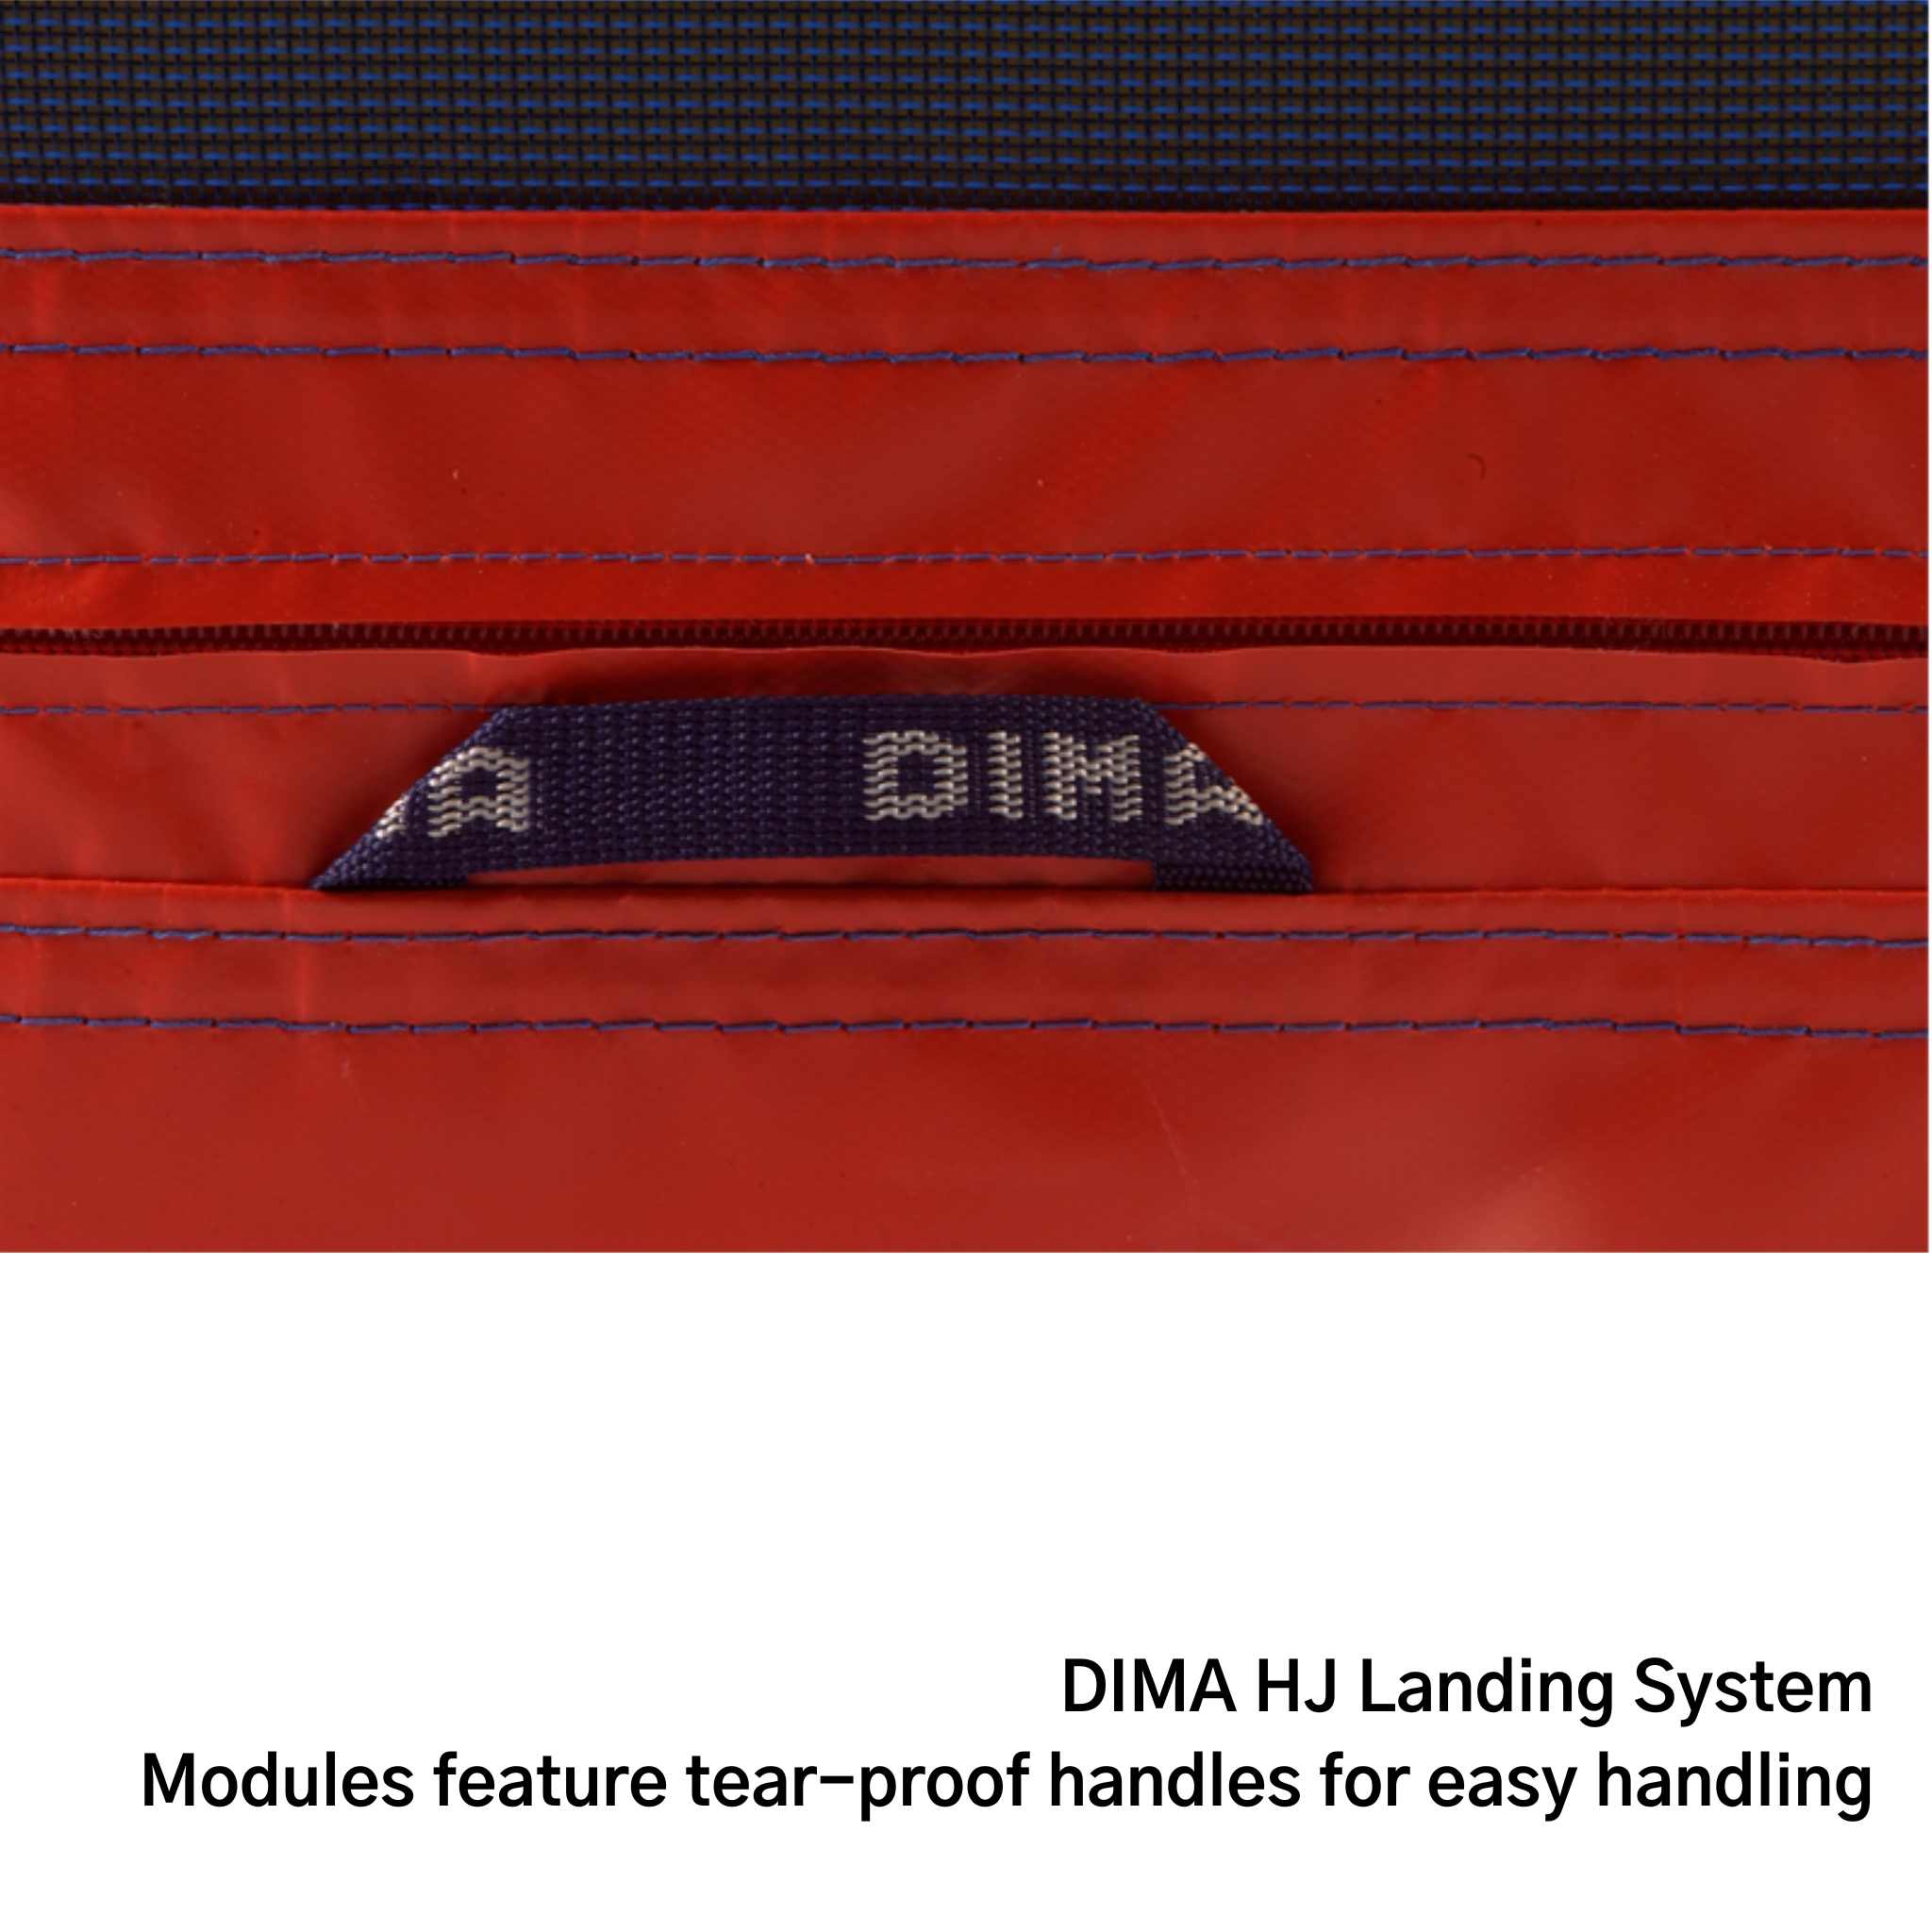 DIMA High Jump Landing System | International HJ Bed | Module Carry Handles